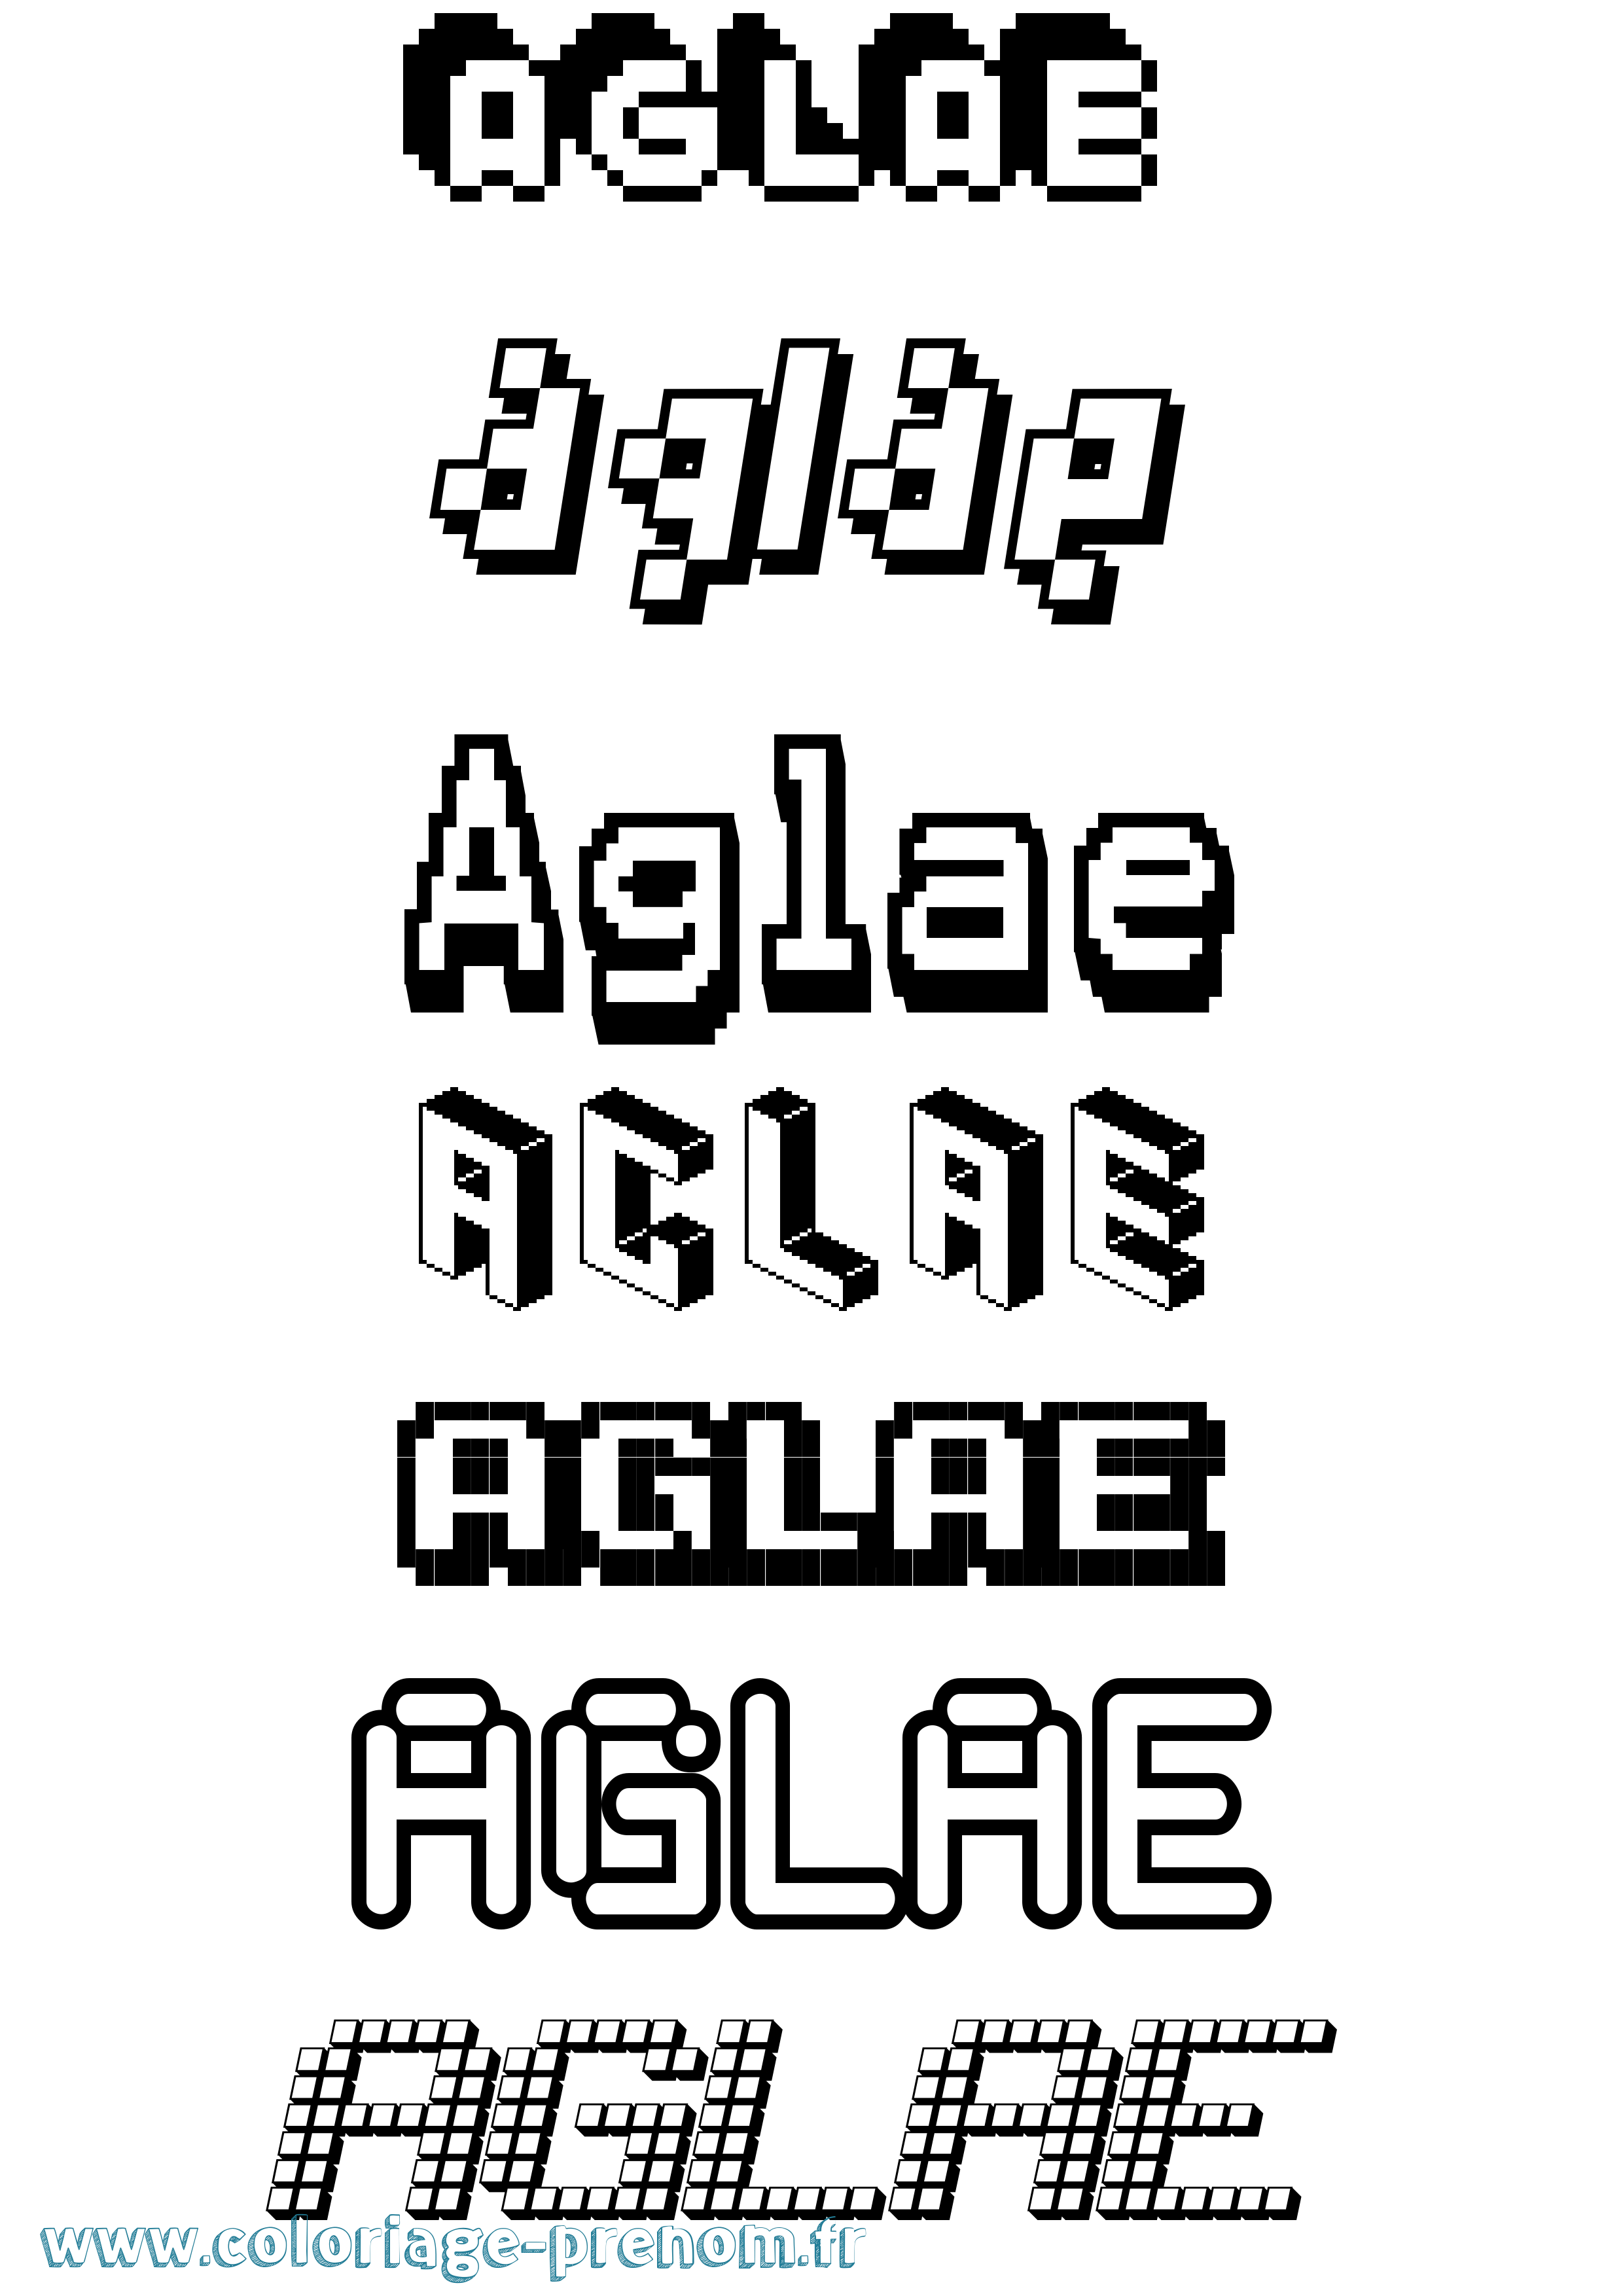 Coloriage prénom Aglae Pixel